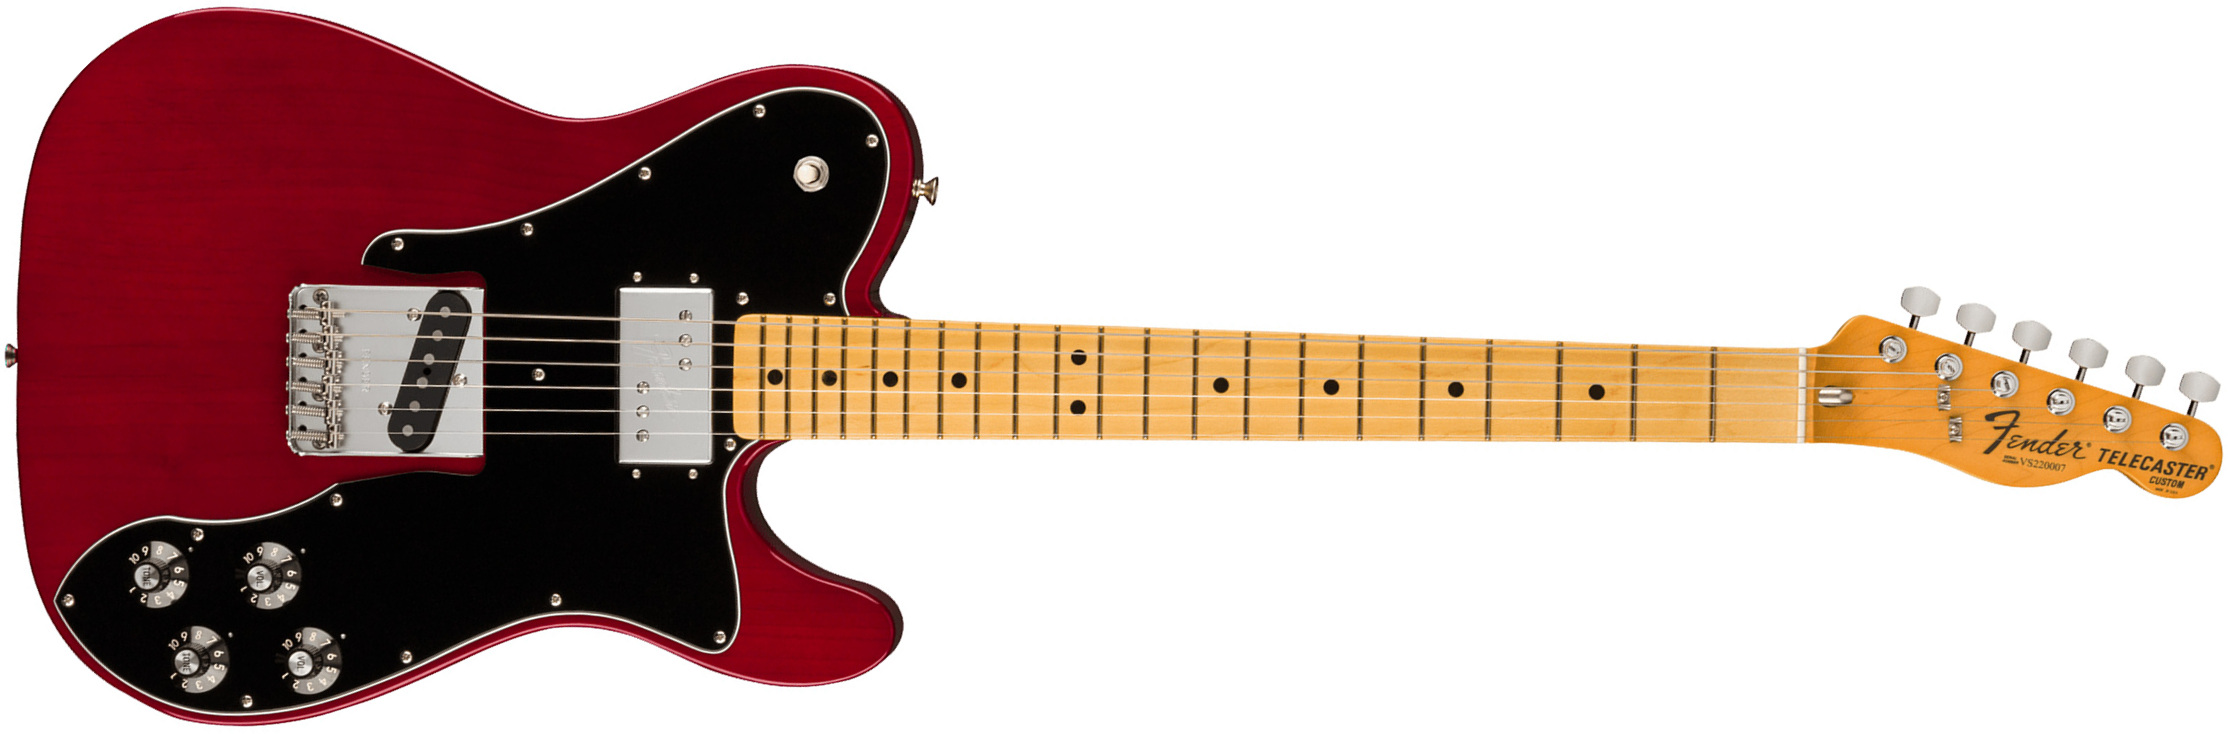 Fender Tele Custom 1977 American Vintage Ii Usa Sh Ht Mn - Wine - Guitarra eléctrica con forma de tel - Main picture